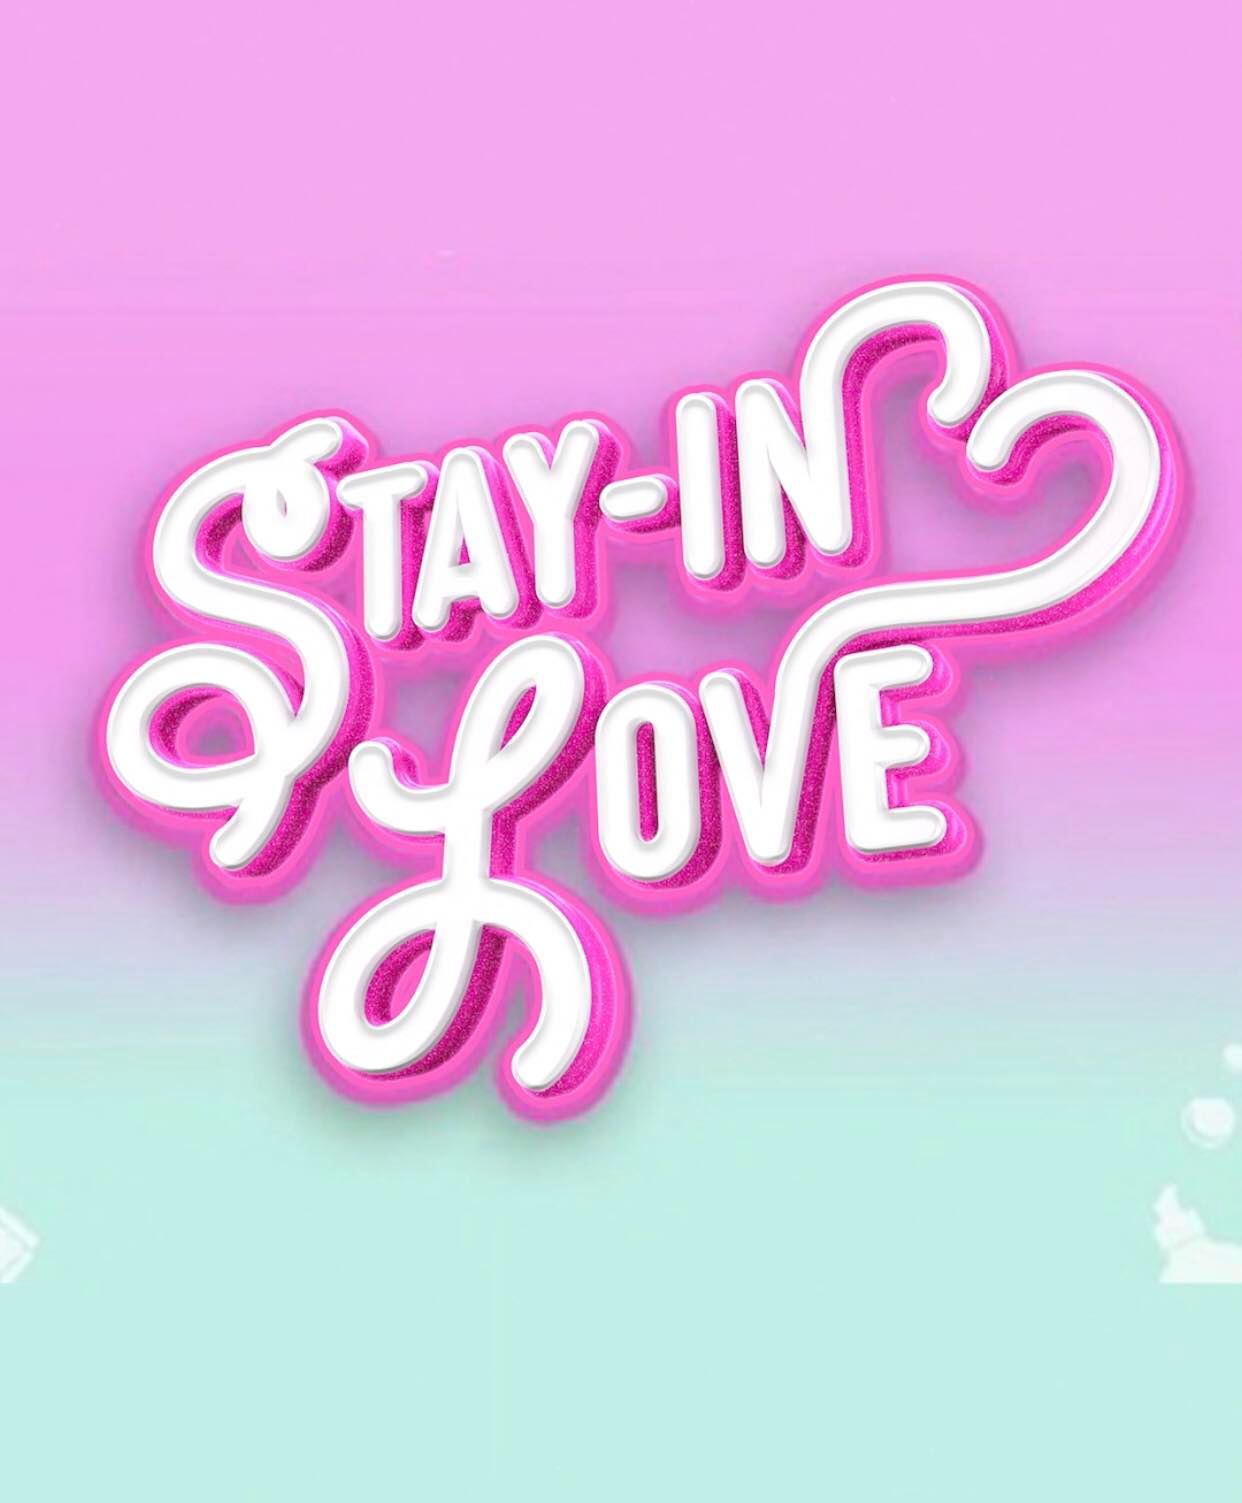 Love stay. SKZX Love stay.